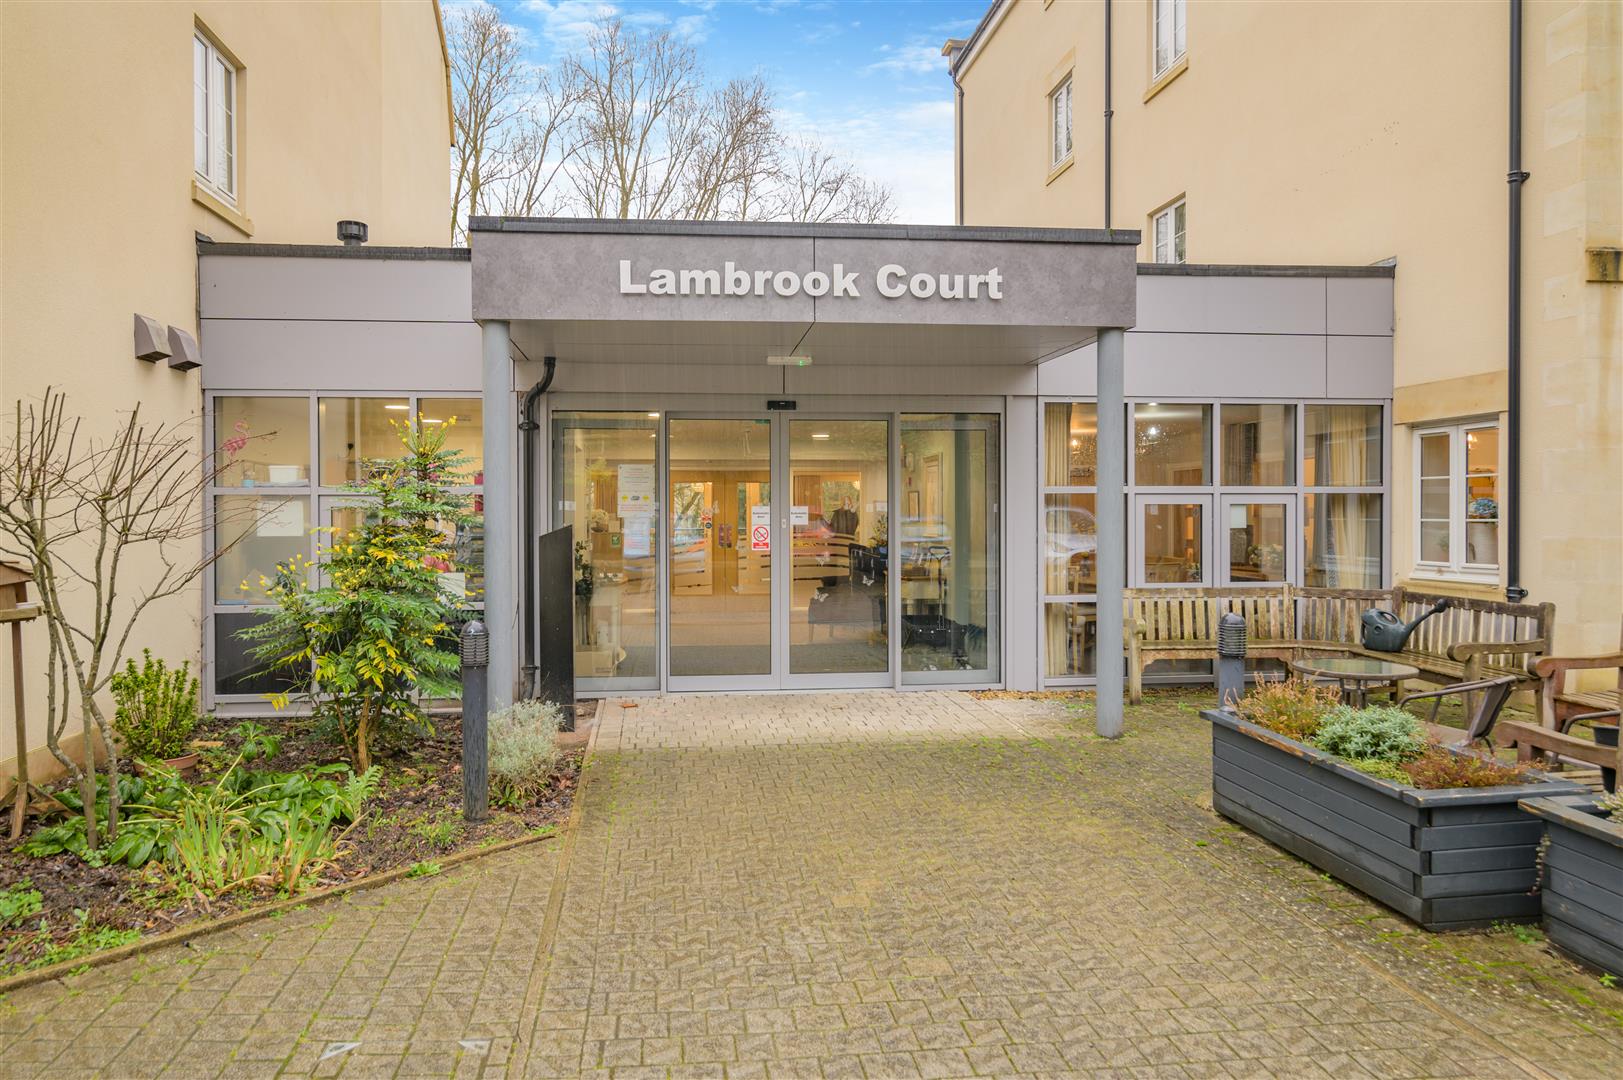 Lambrook Court, Gloucester Road, Larkhall, Bath